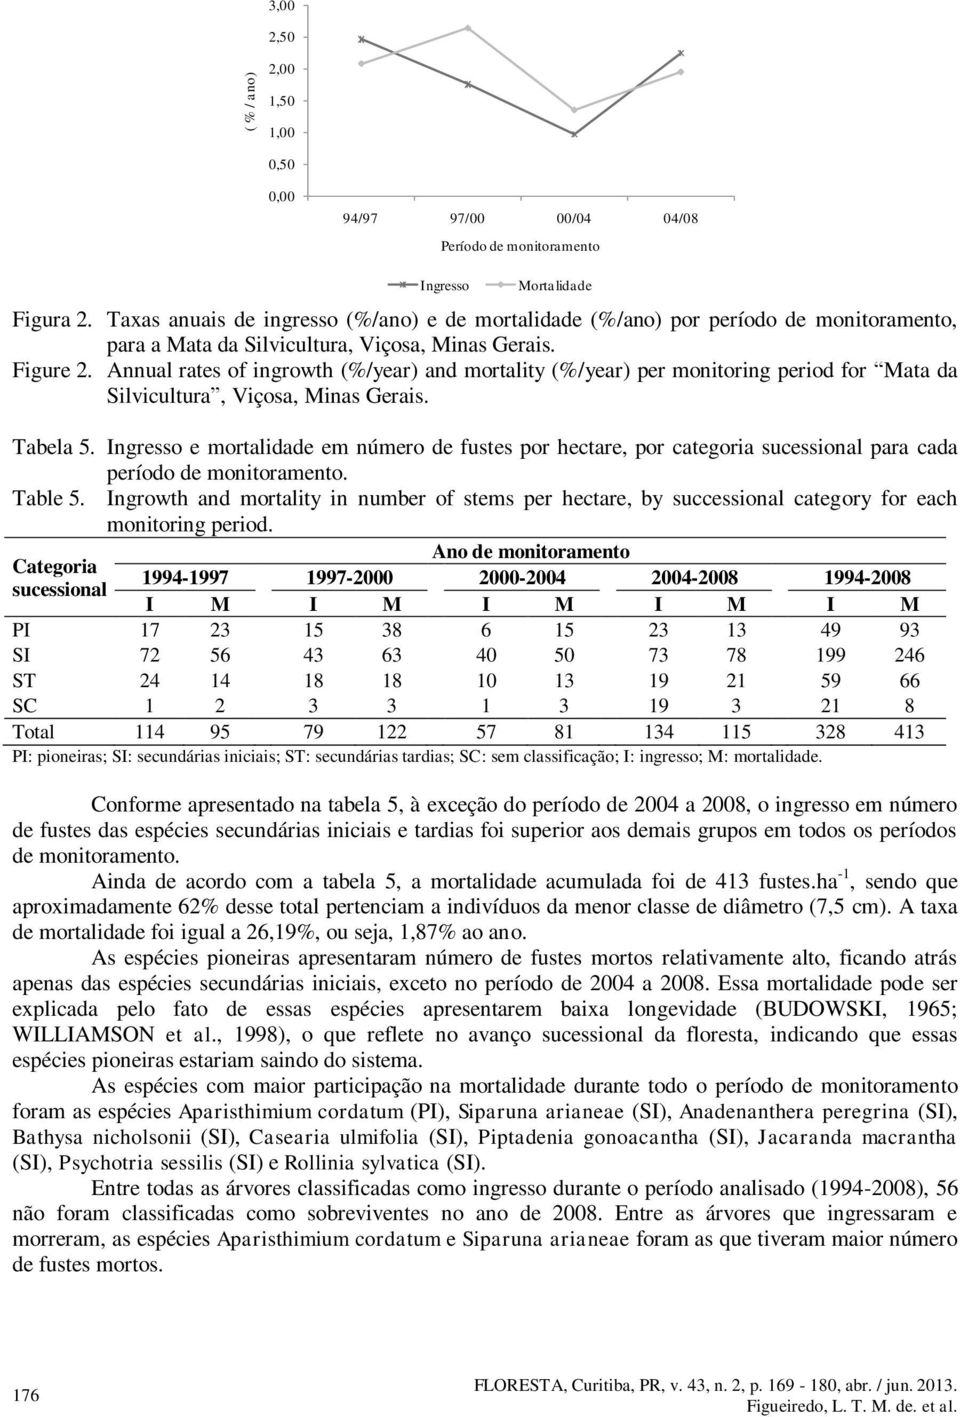 Annual rates of ingrowth (%/year) and mortality (%/year) per monitoring period for Mata da Silvicultura, Viçosa, Minas Gerais. Tabela 5.